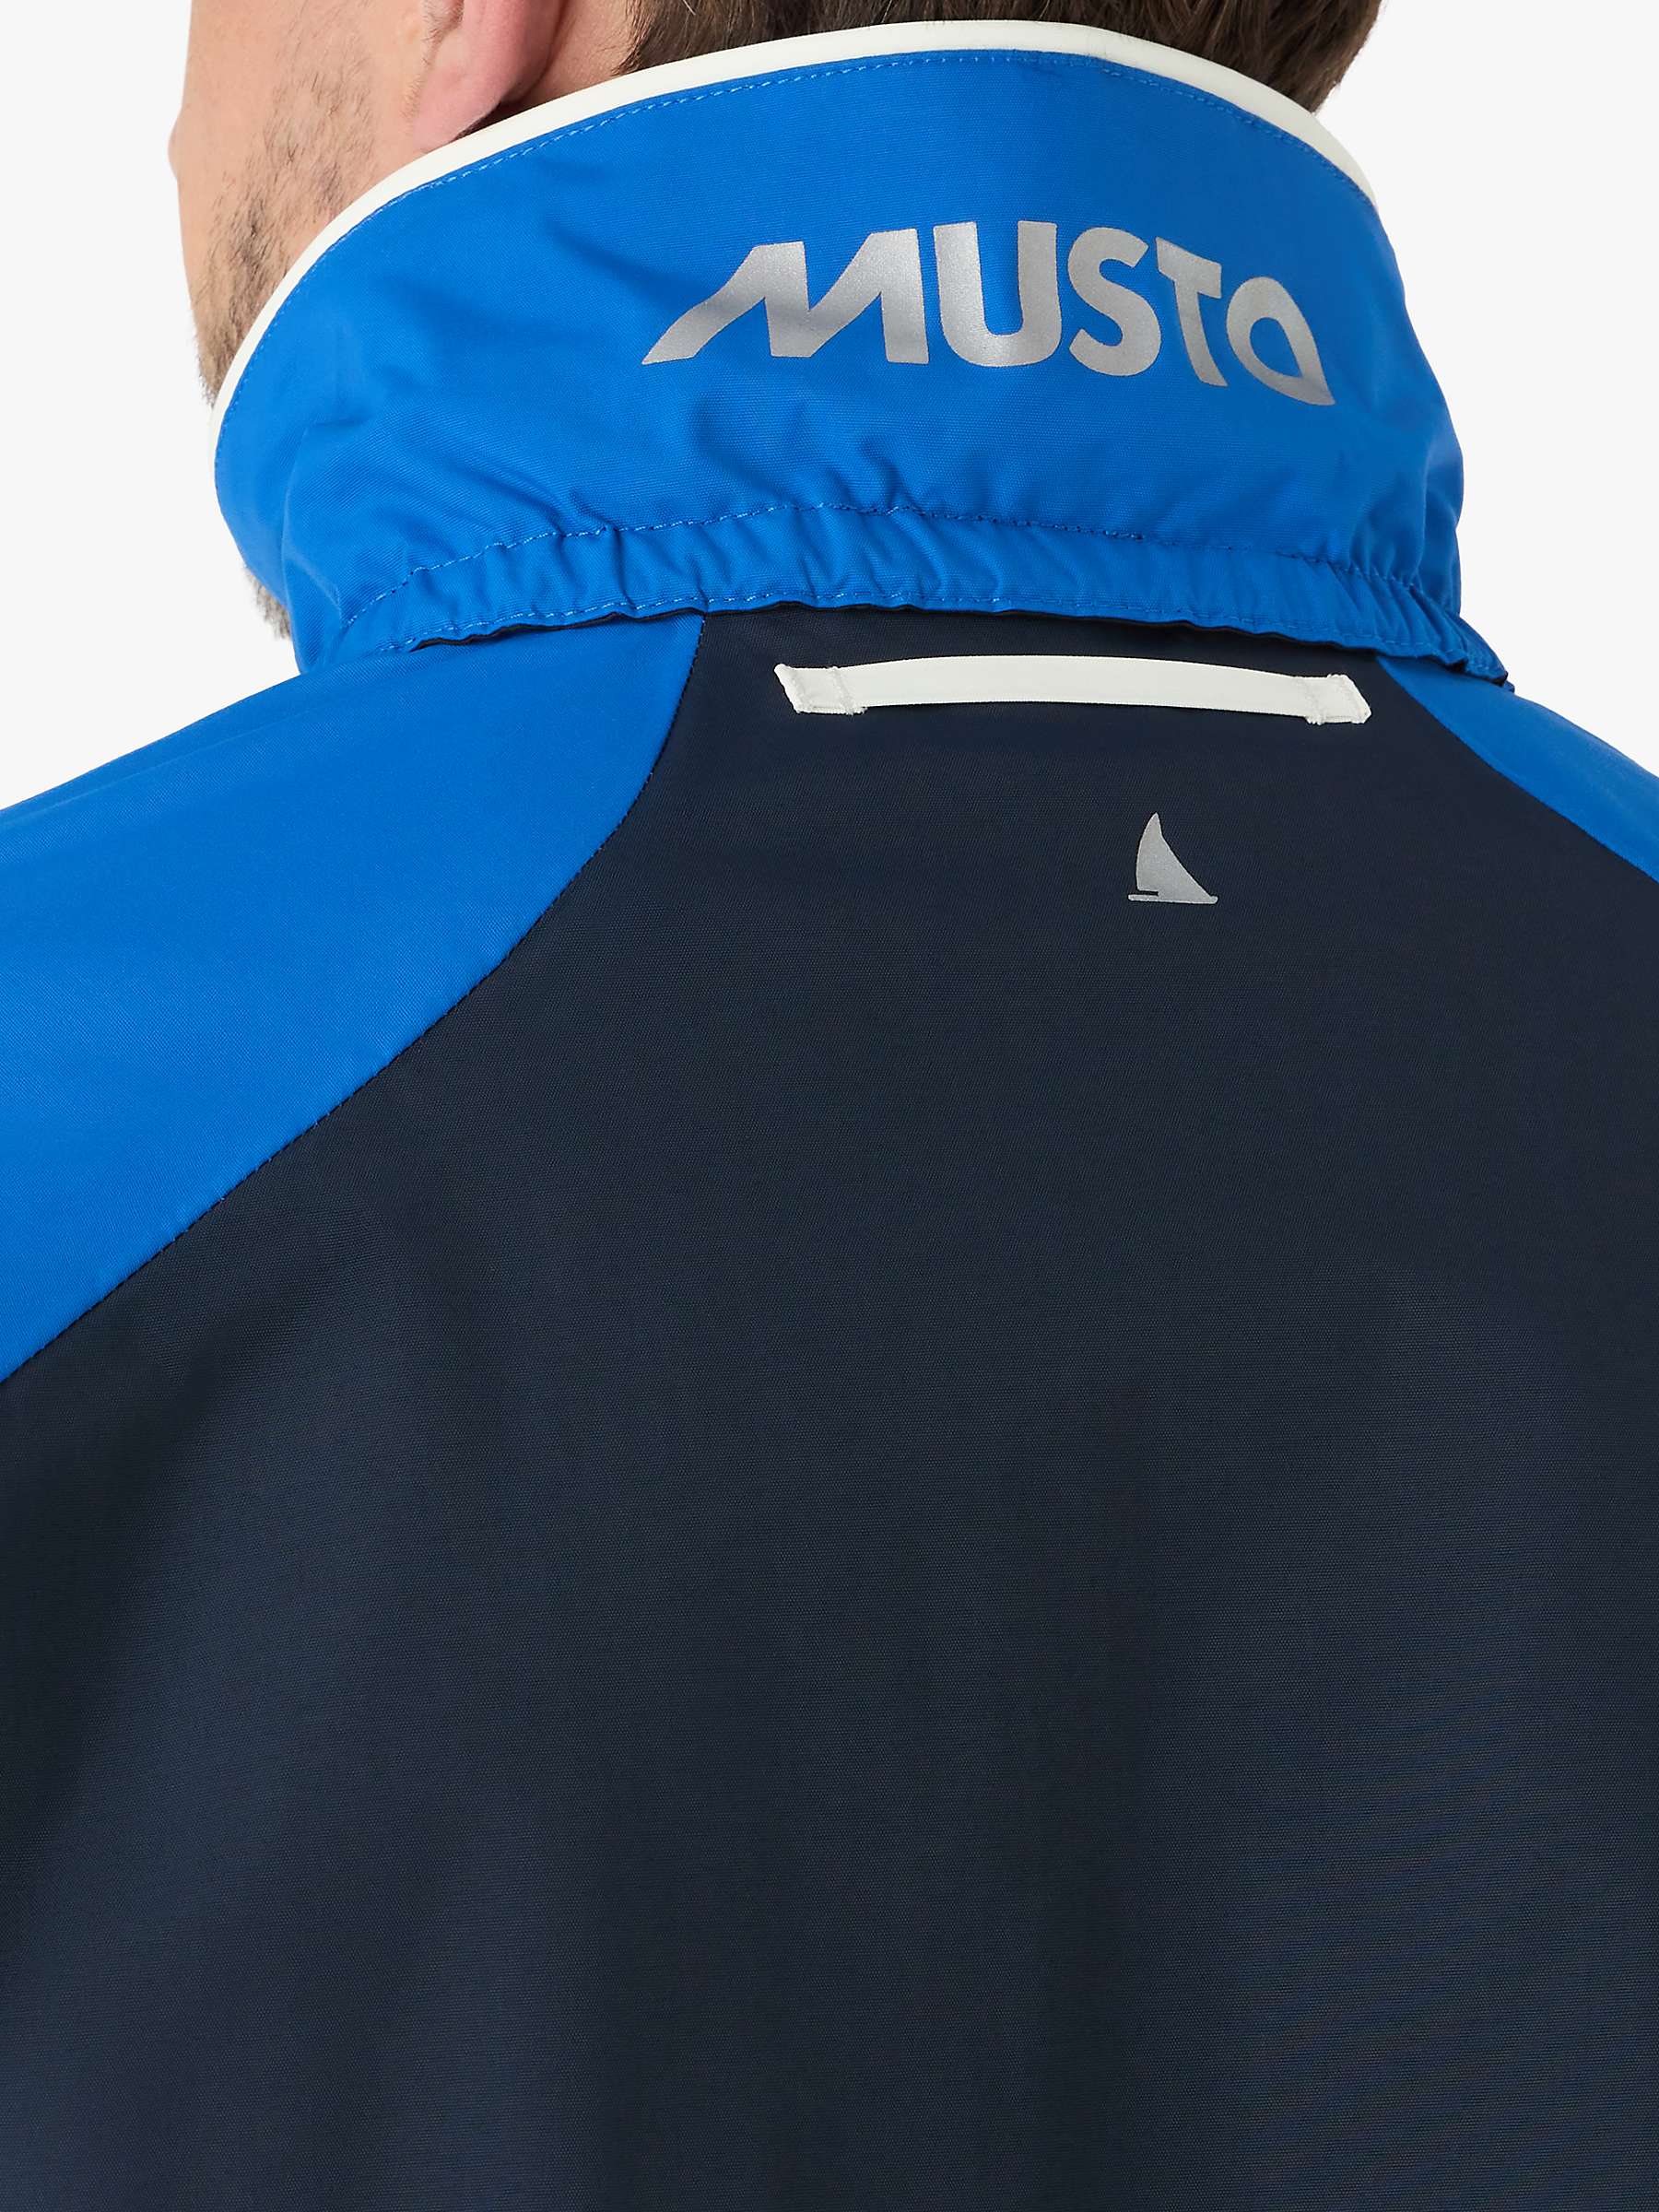 Buy Musto Sardinia BR1 Men's Waterproof Jacket, Aruba Blue/Navy Online at johnlewis.com